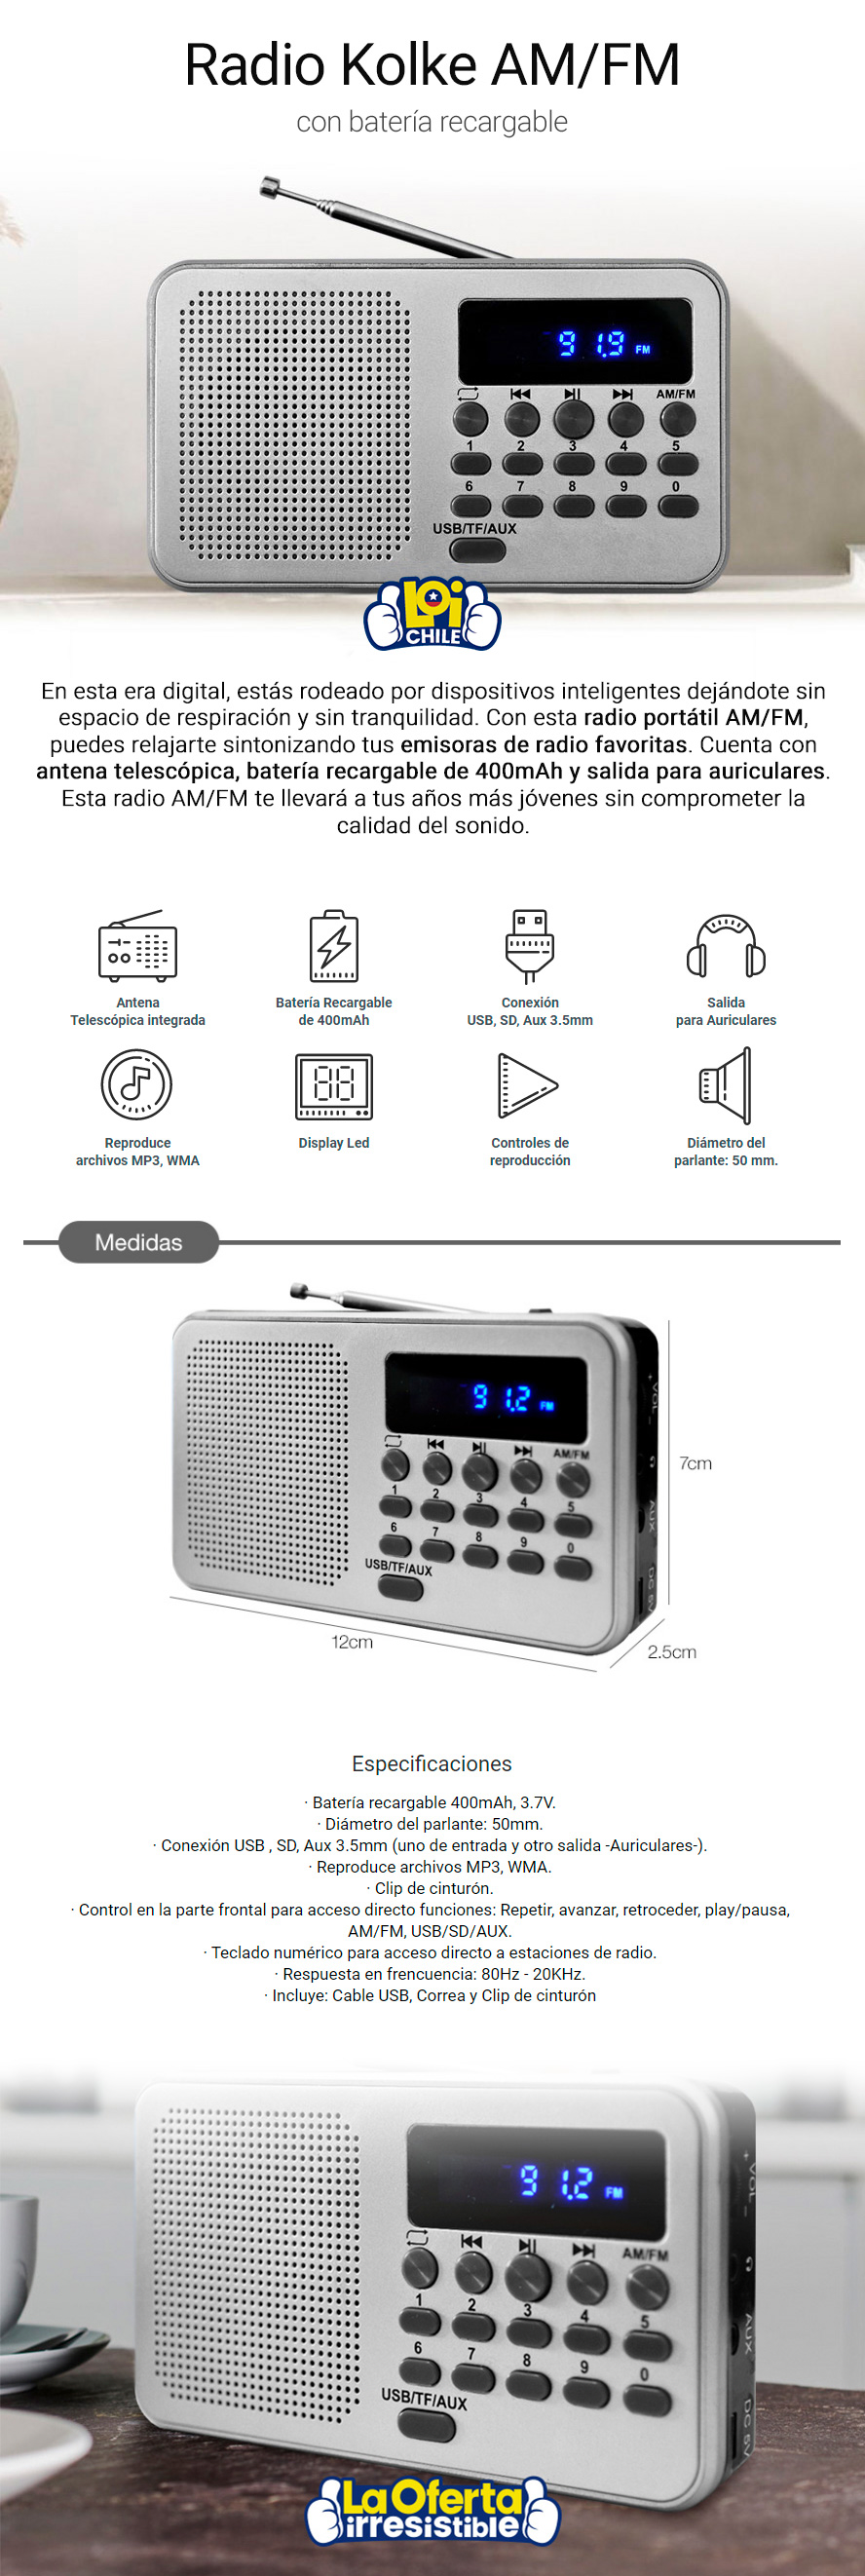 Radio Kolke con Batería Recargable KPR-364 AM/FM 400mAh